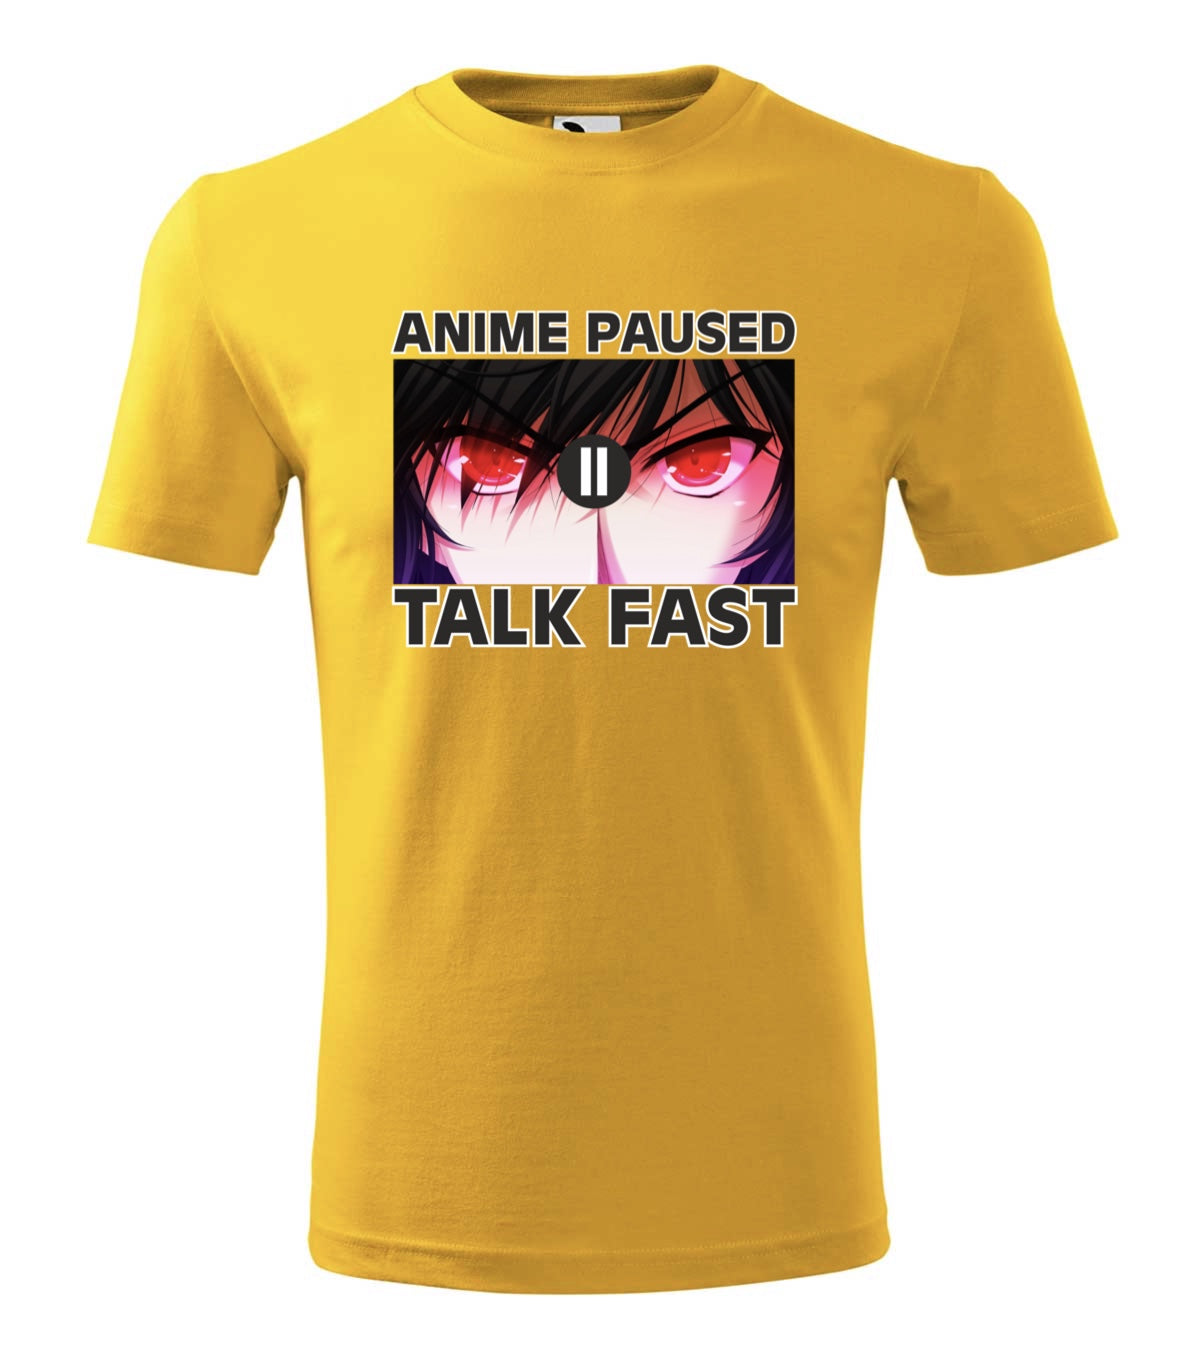 Anime Paused férfi technikai póló